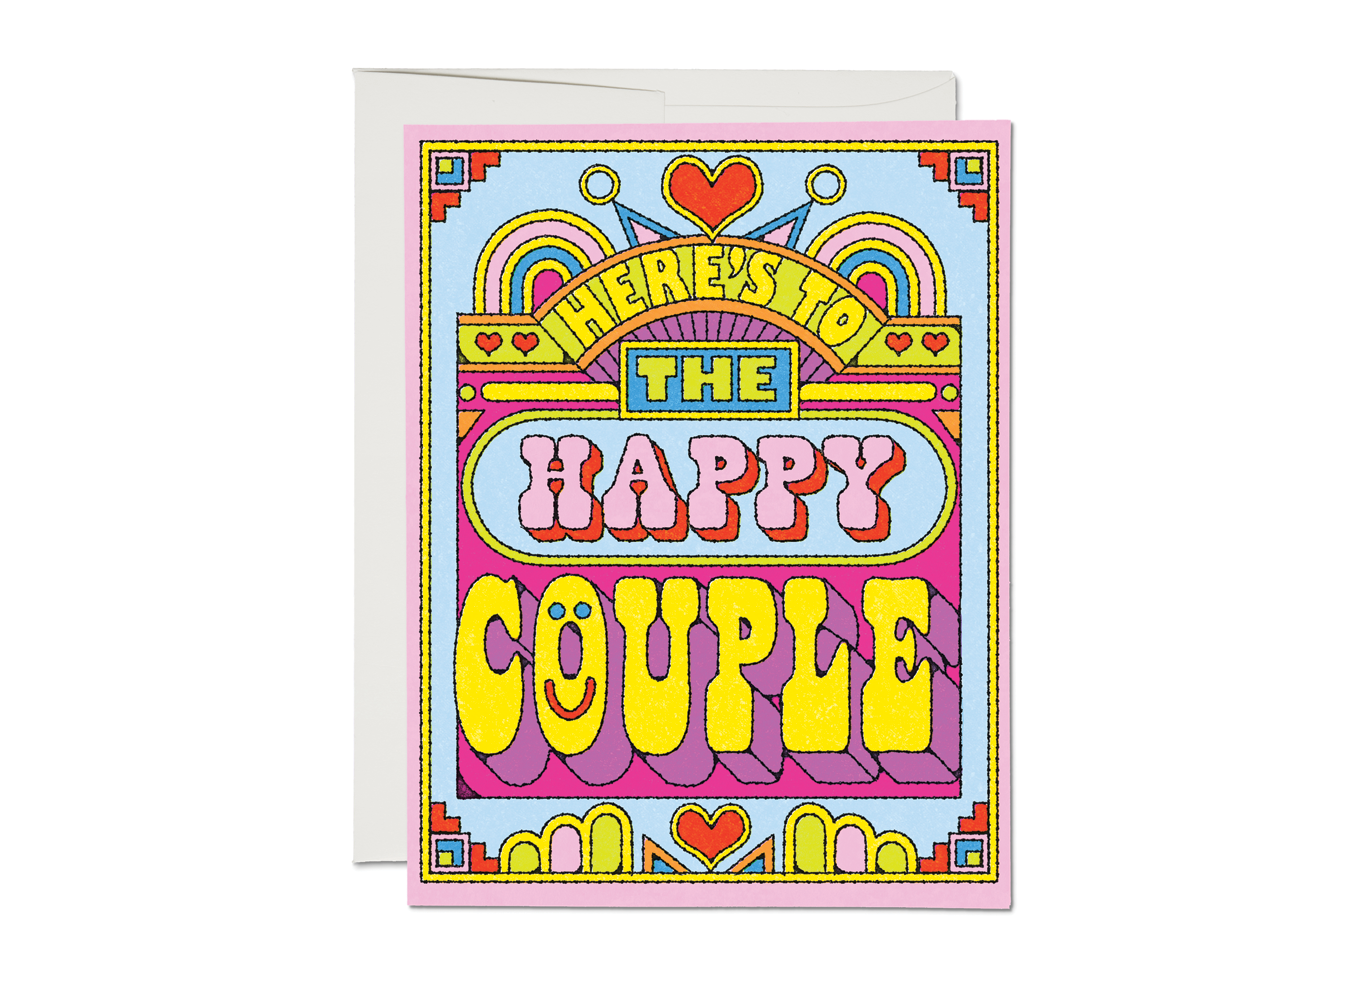 happy couple card